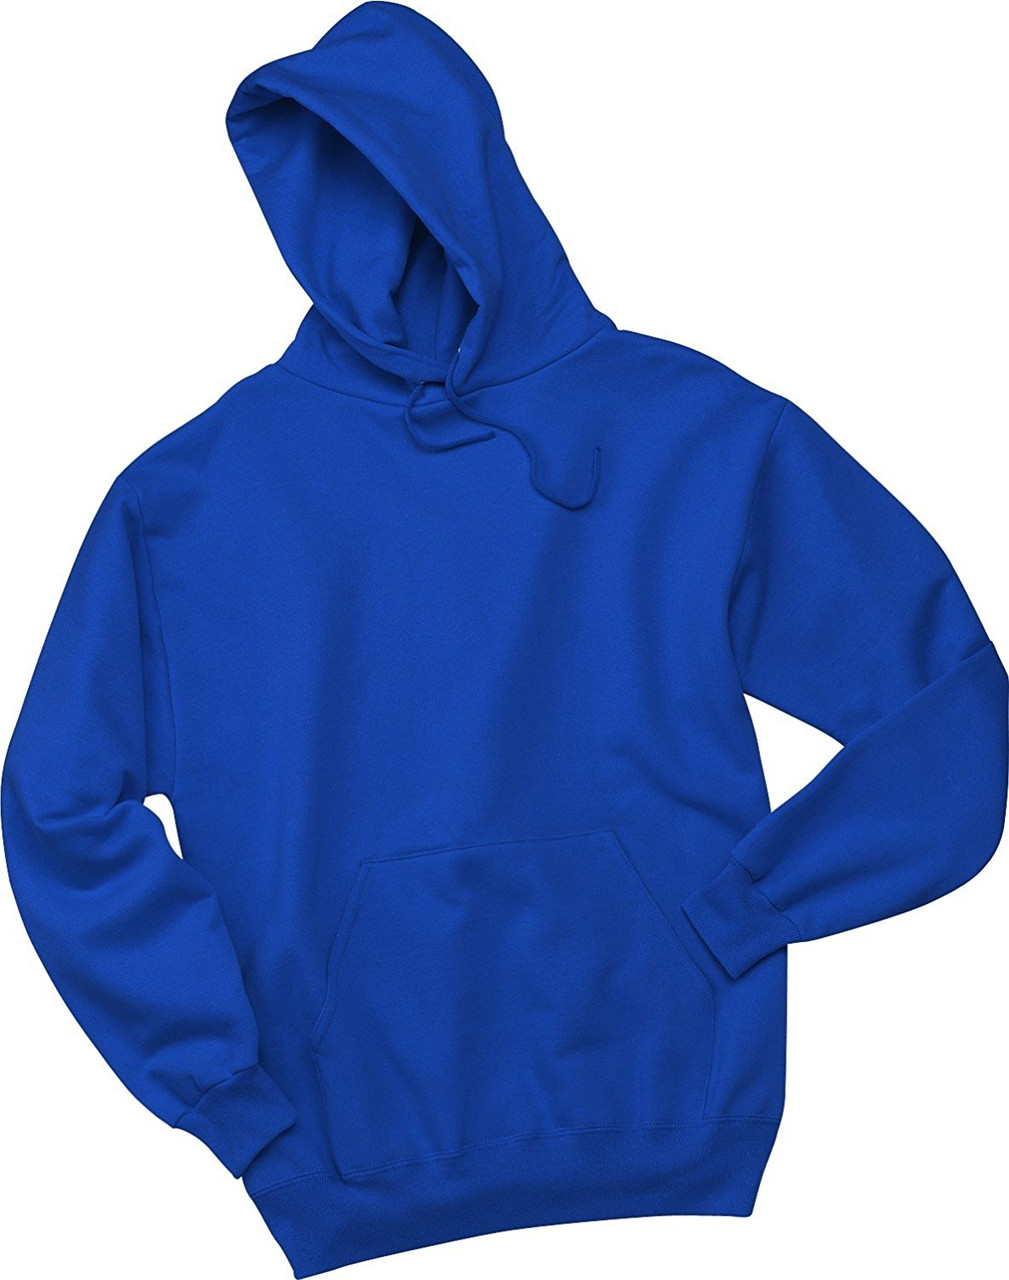 Jerzees 8 oz NuBlend 50/50 Pullover Hoodie Sweatshirt 996 blue X-Large -  Gravity Trading